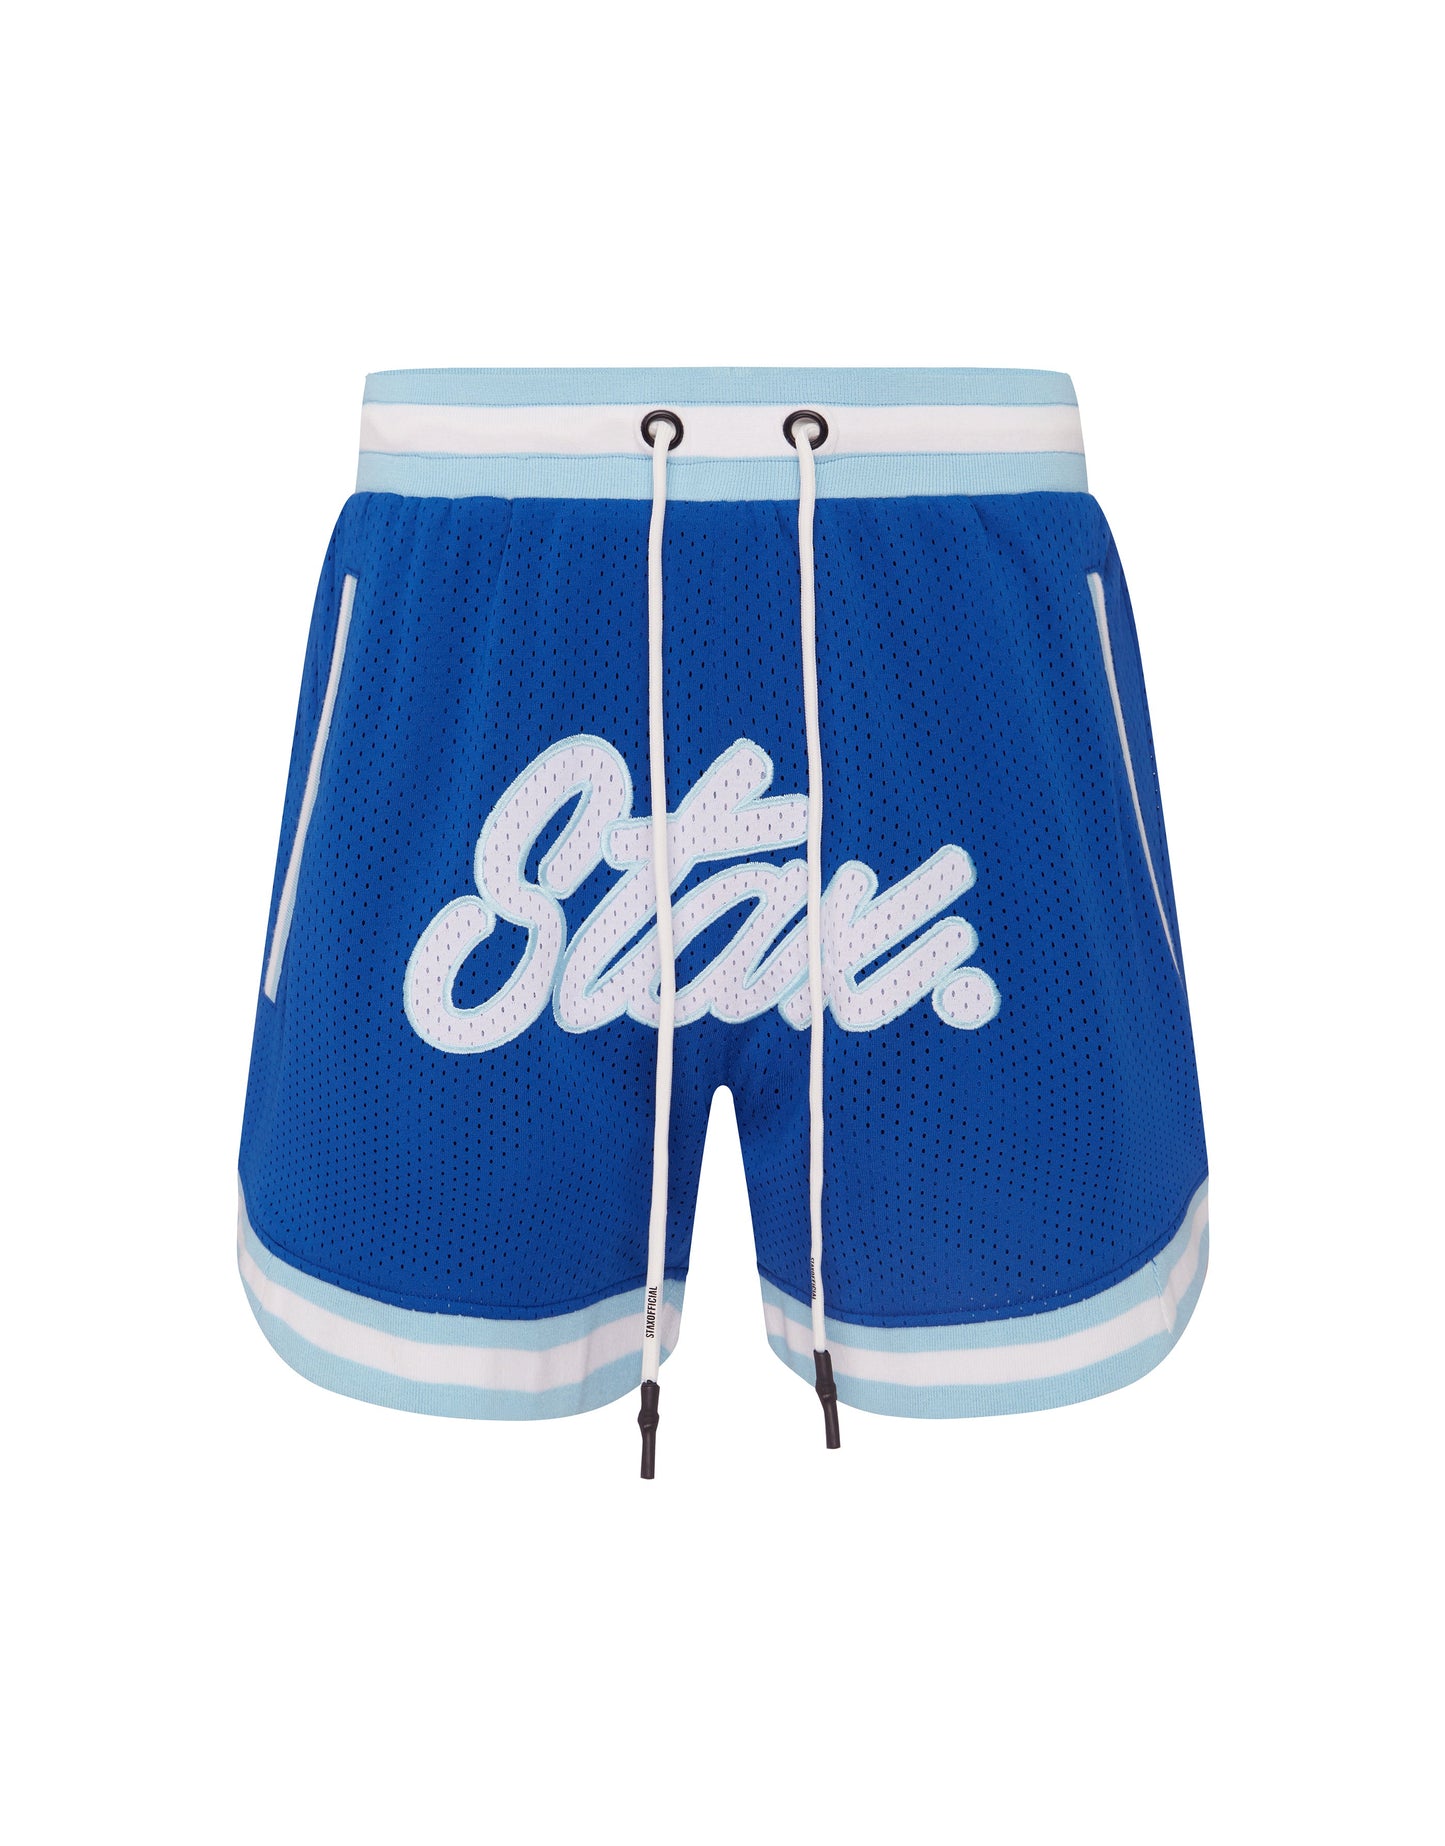 STAX. Court Drip Basketball Shorts - Duke